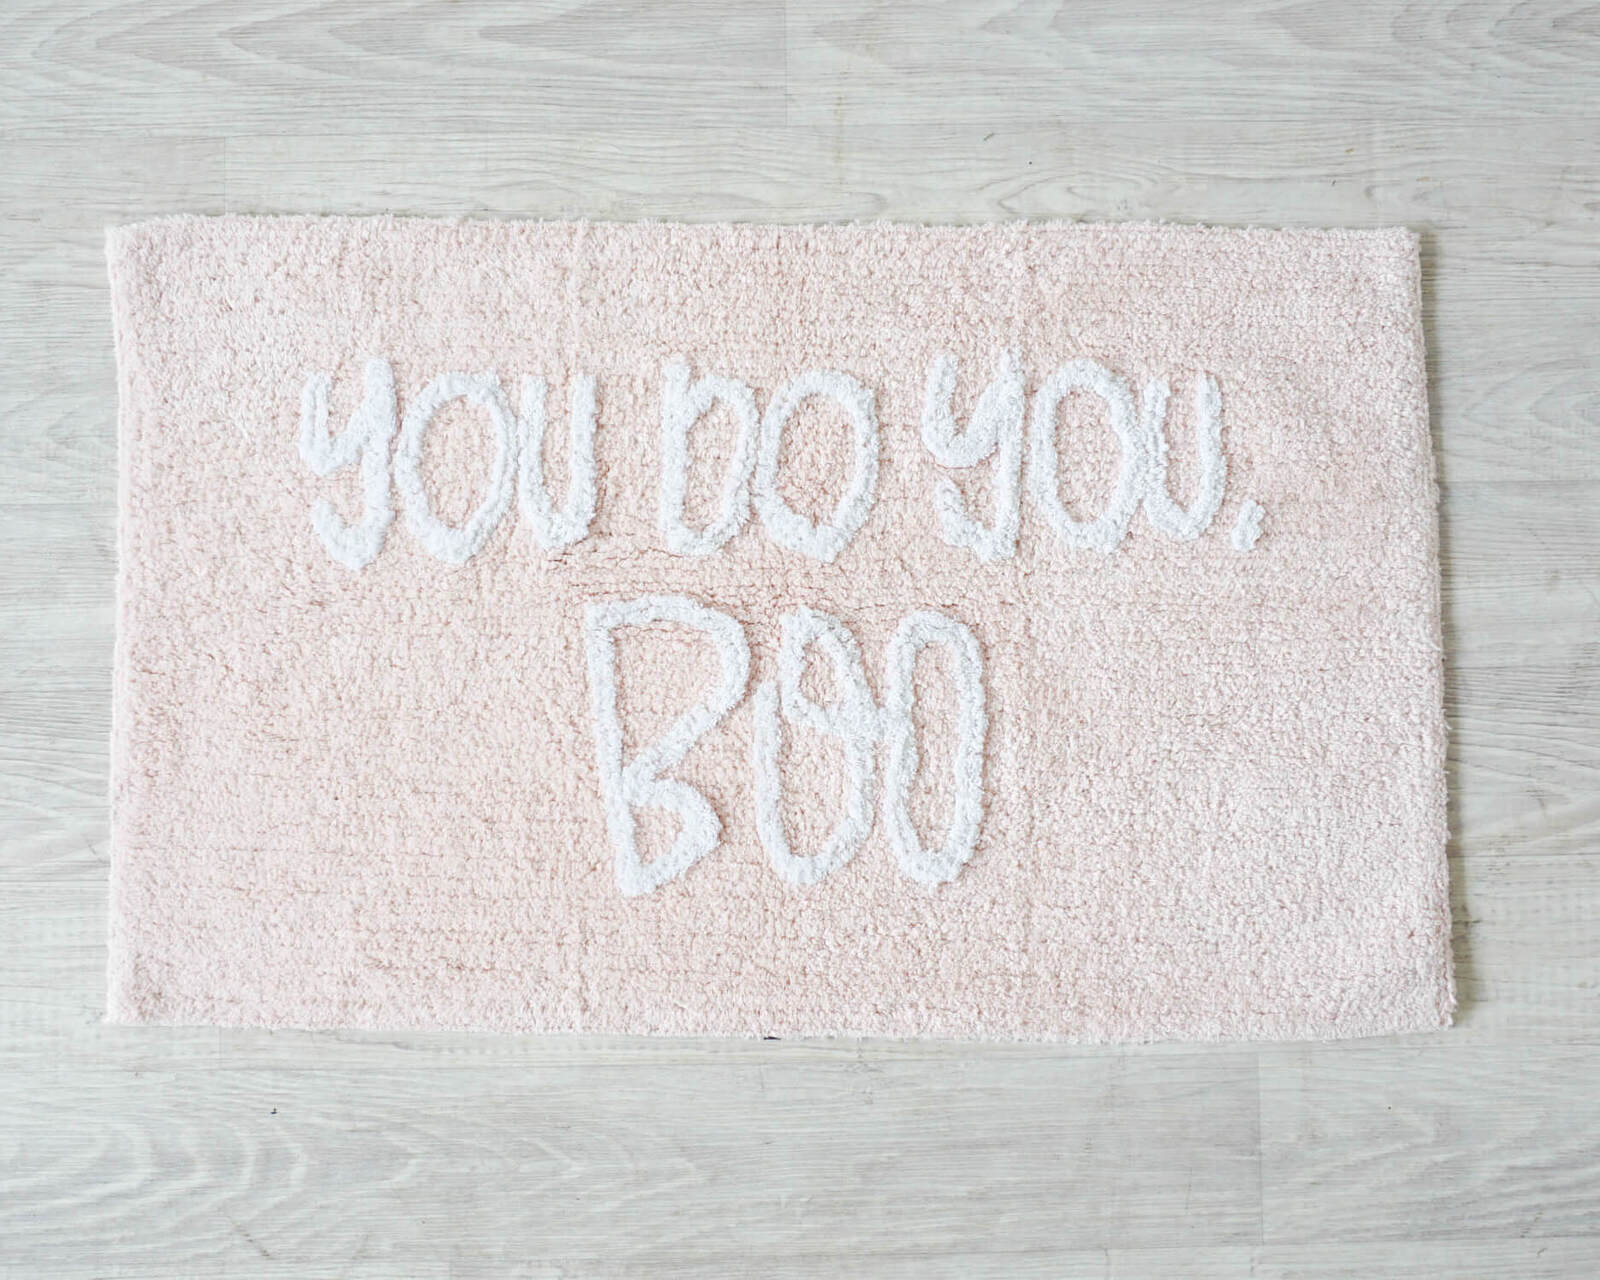 Bath Mat - You Do You Boo - Pink - 80x50cm